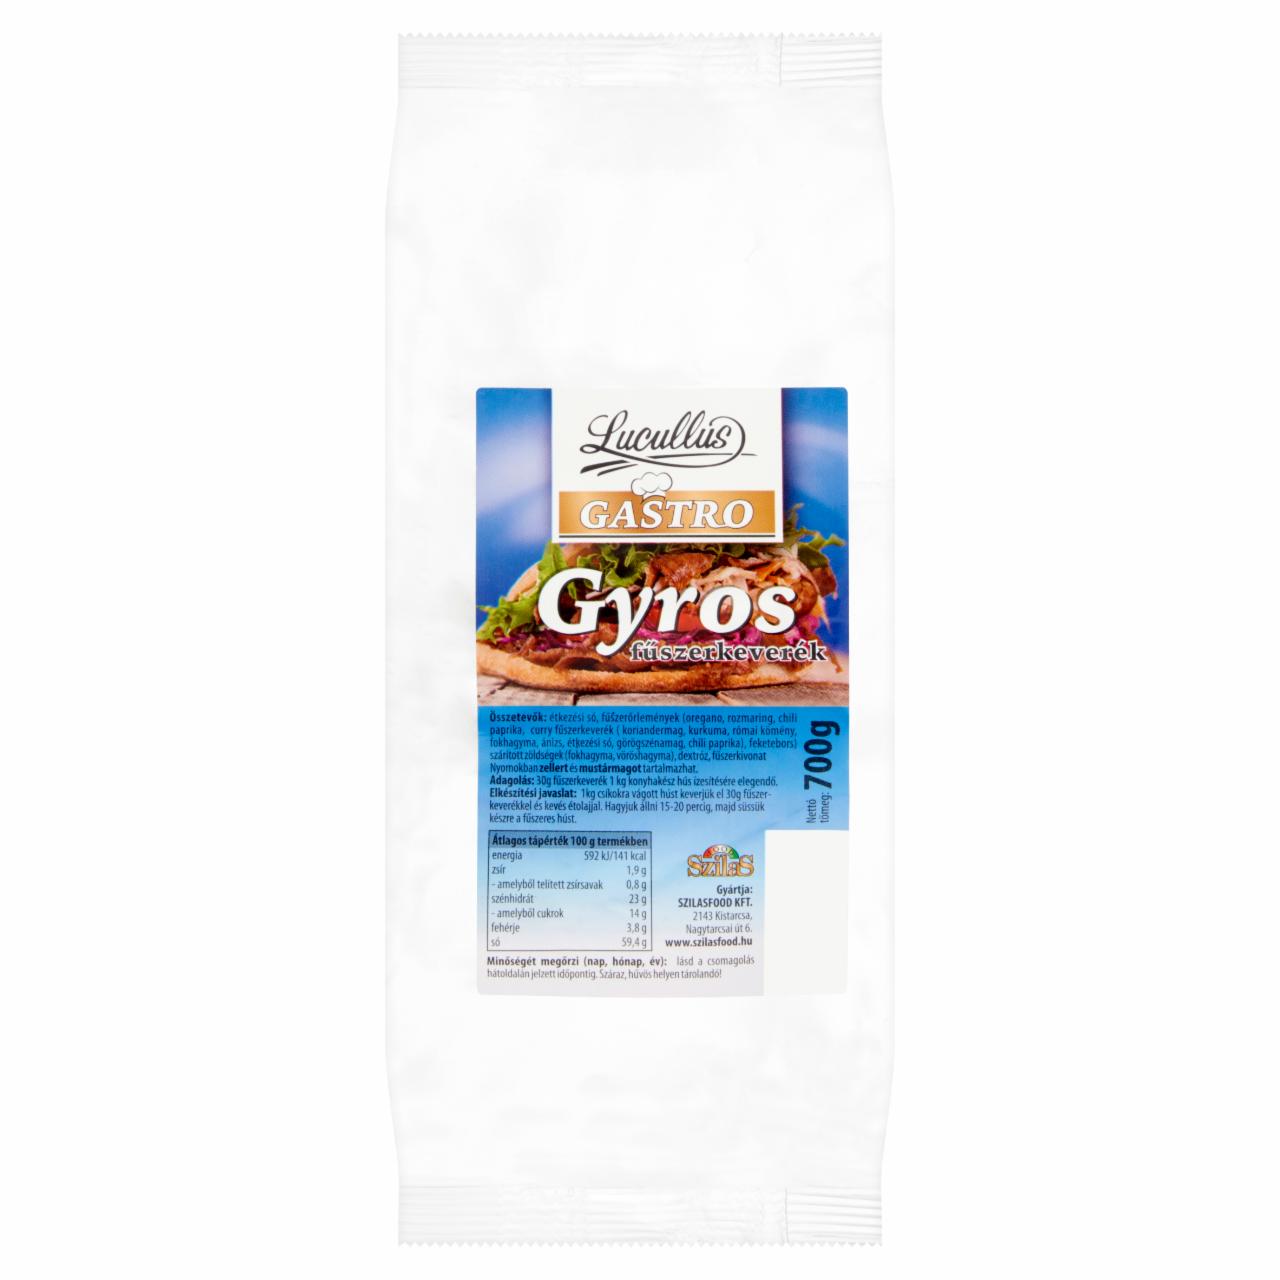 Képek - Lucullus Gastro gyros fűszerkeverék 700 g